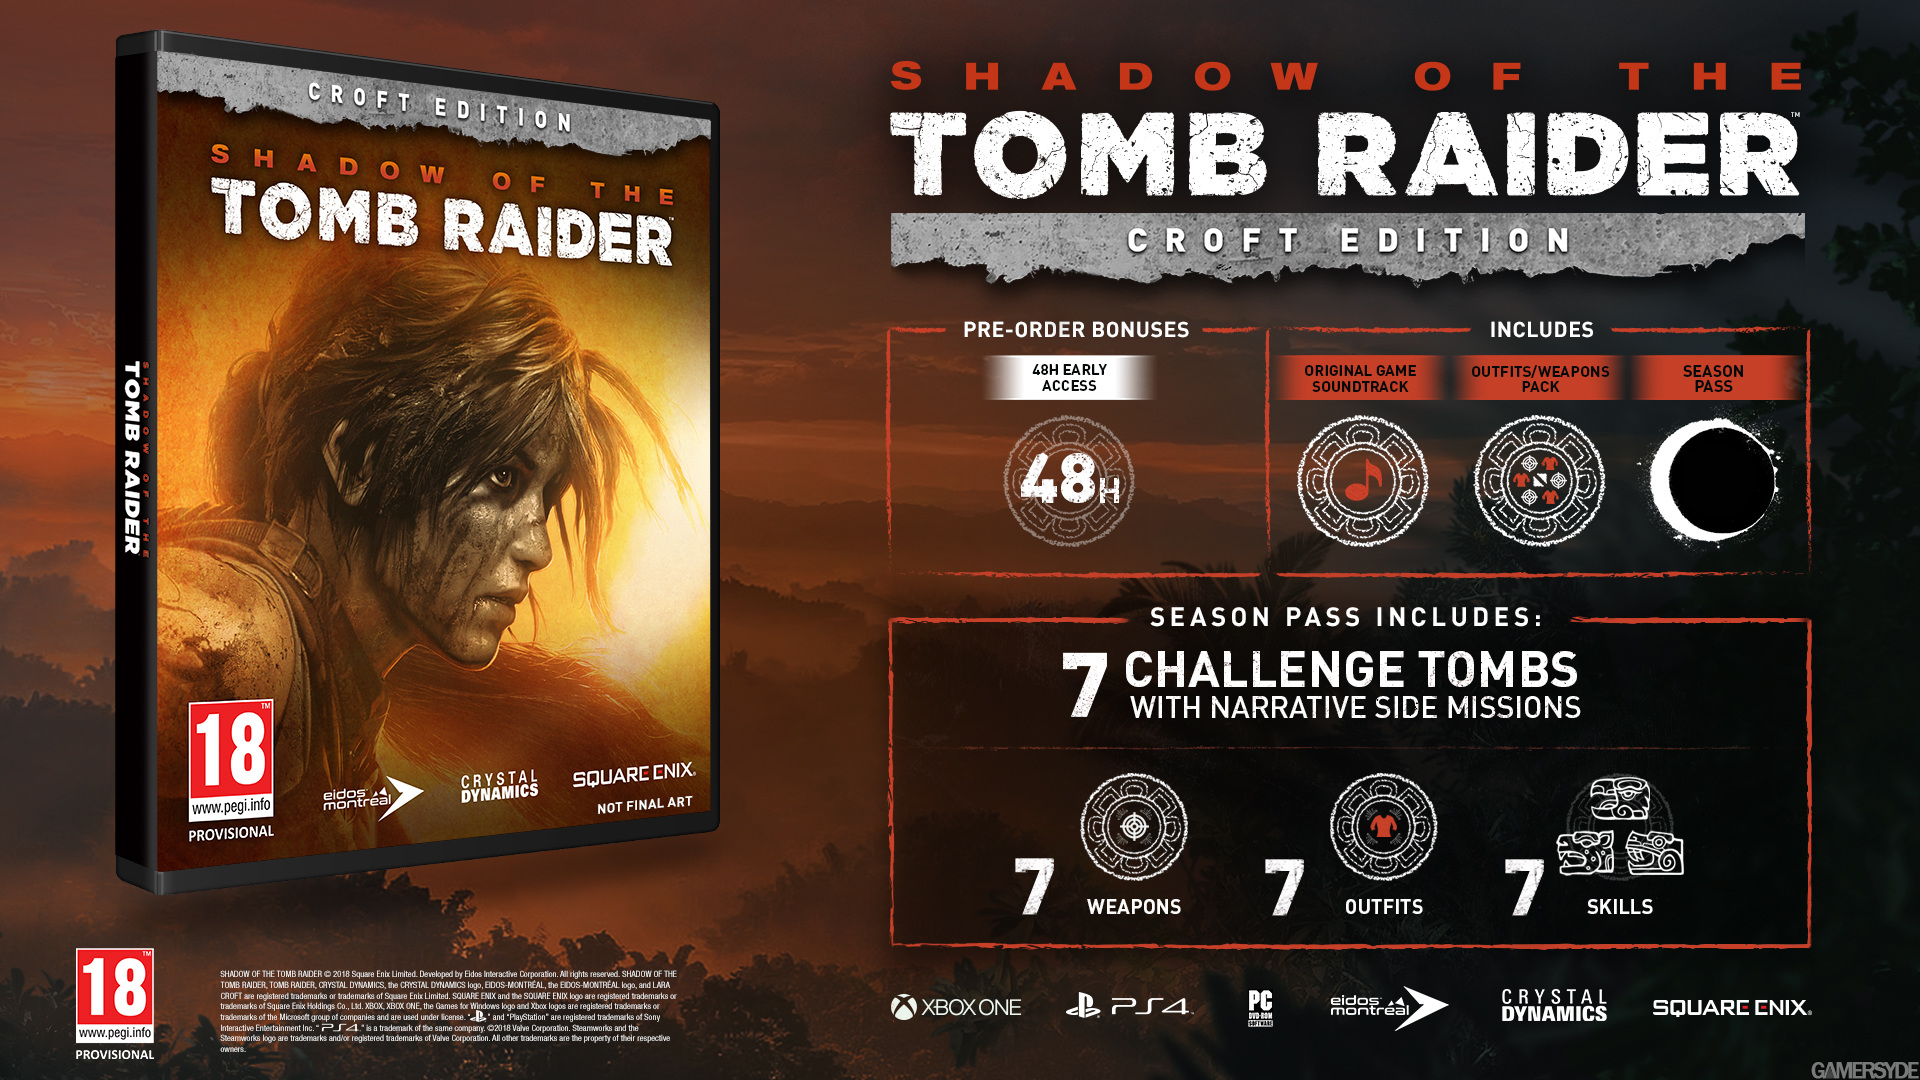 Tomb raider ps4 купить. Shadow of the Tomb Raider ps4. Tomb Raider Croft Edition ps4. Shadow of the Tomb Raider - Croft Edition. Shadow of the Tomb Raider диск.